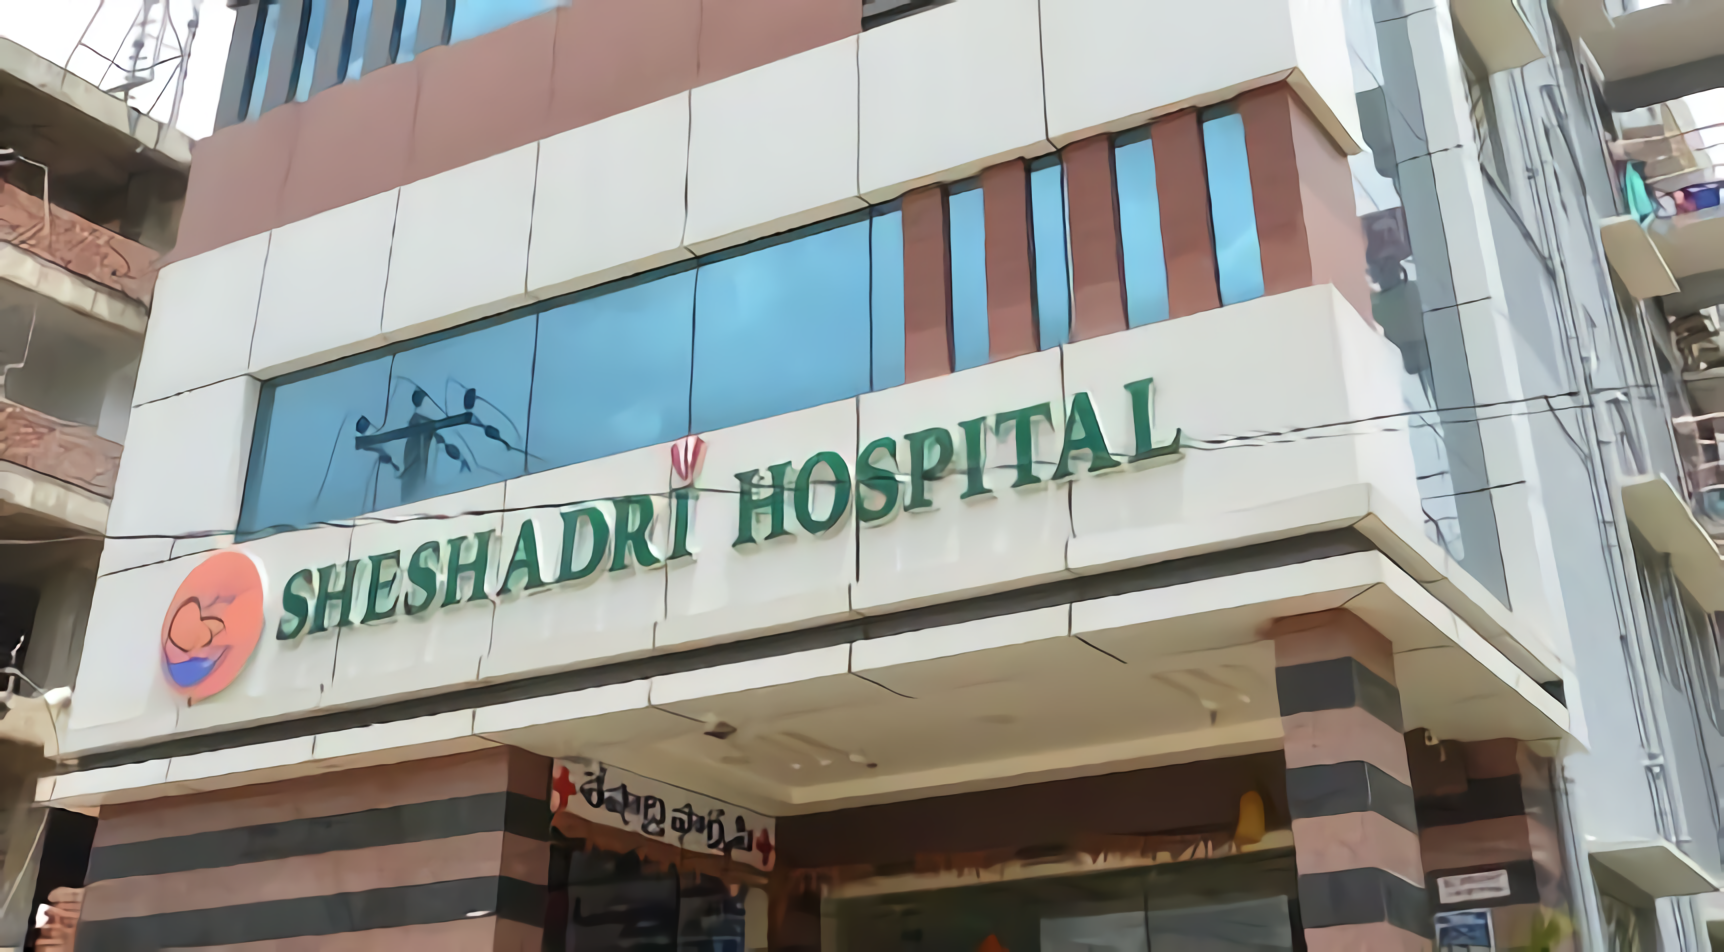 Sheshadri Hospital